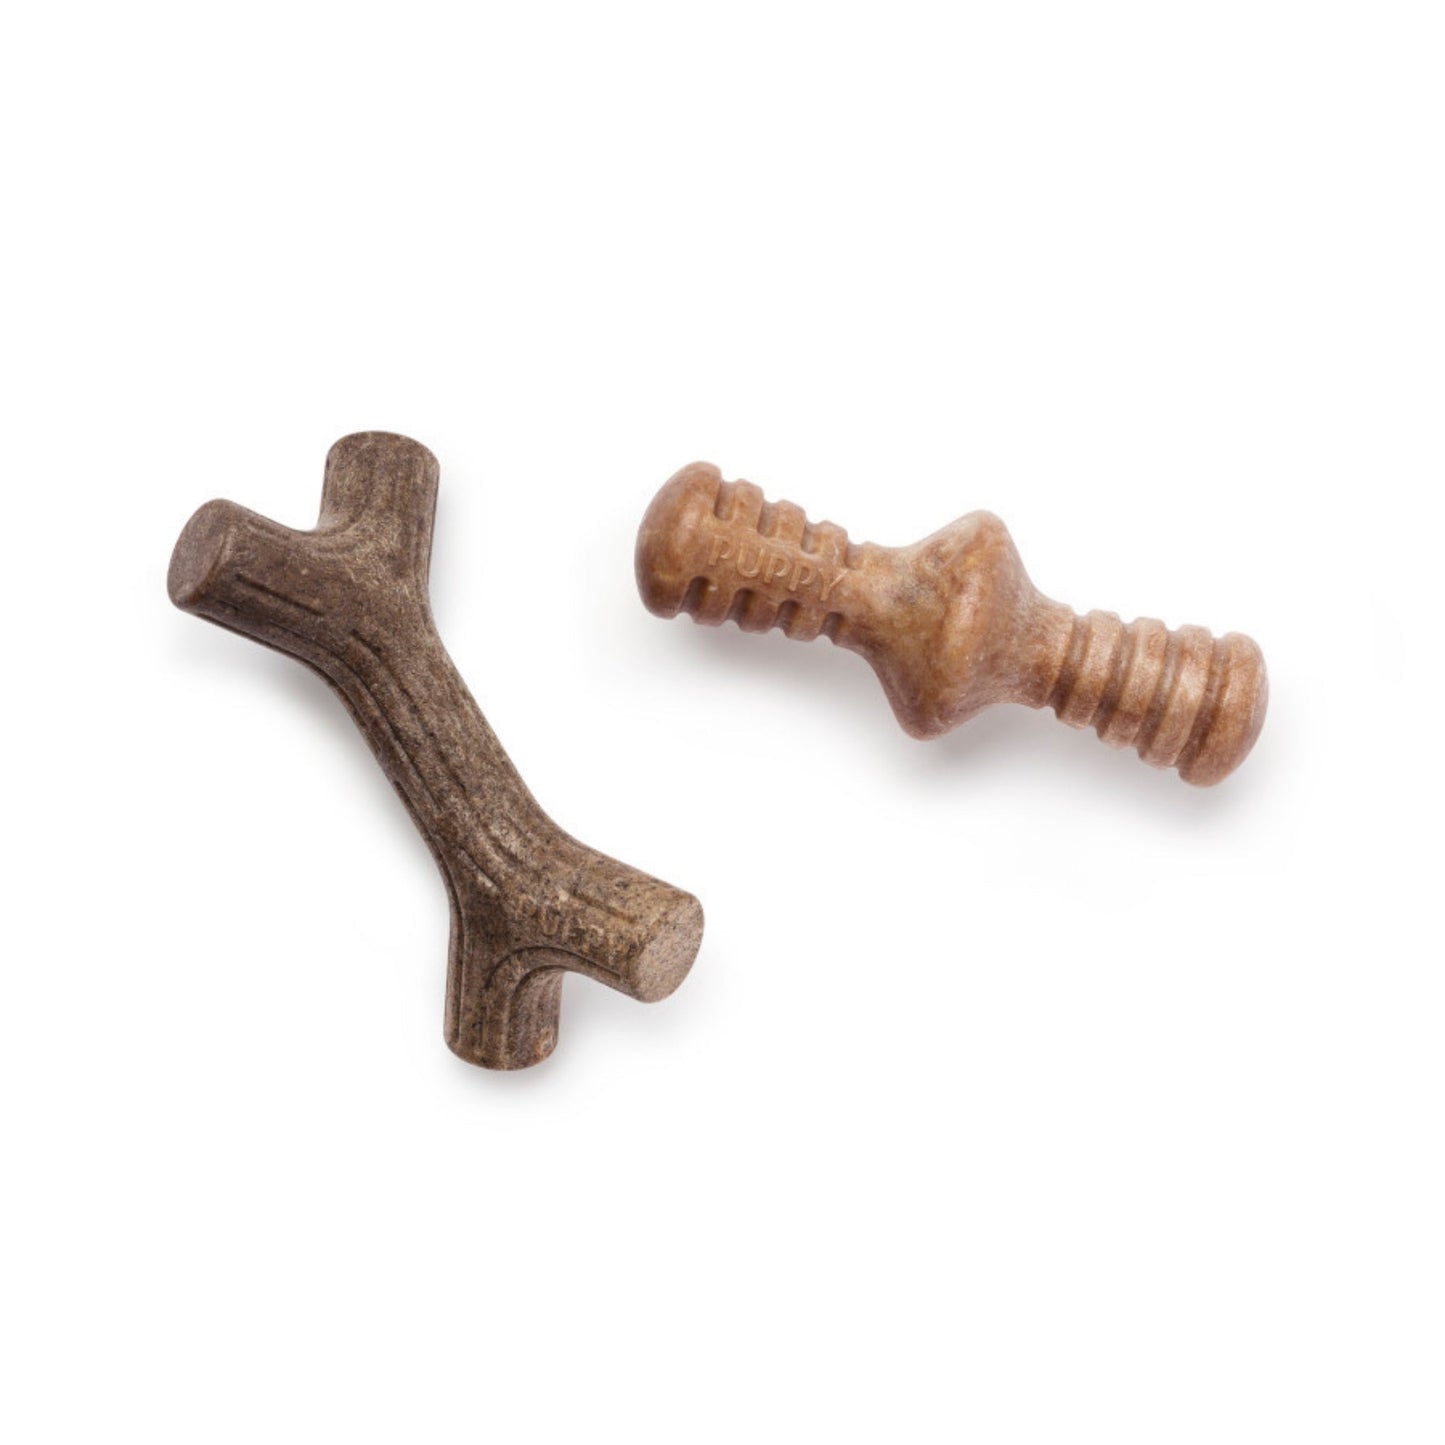 Benebone Puppy Pack Stick & Zaggler Dog Chew Toy Maplewood & Bacon, 1ea/XS|2 pk